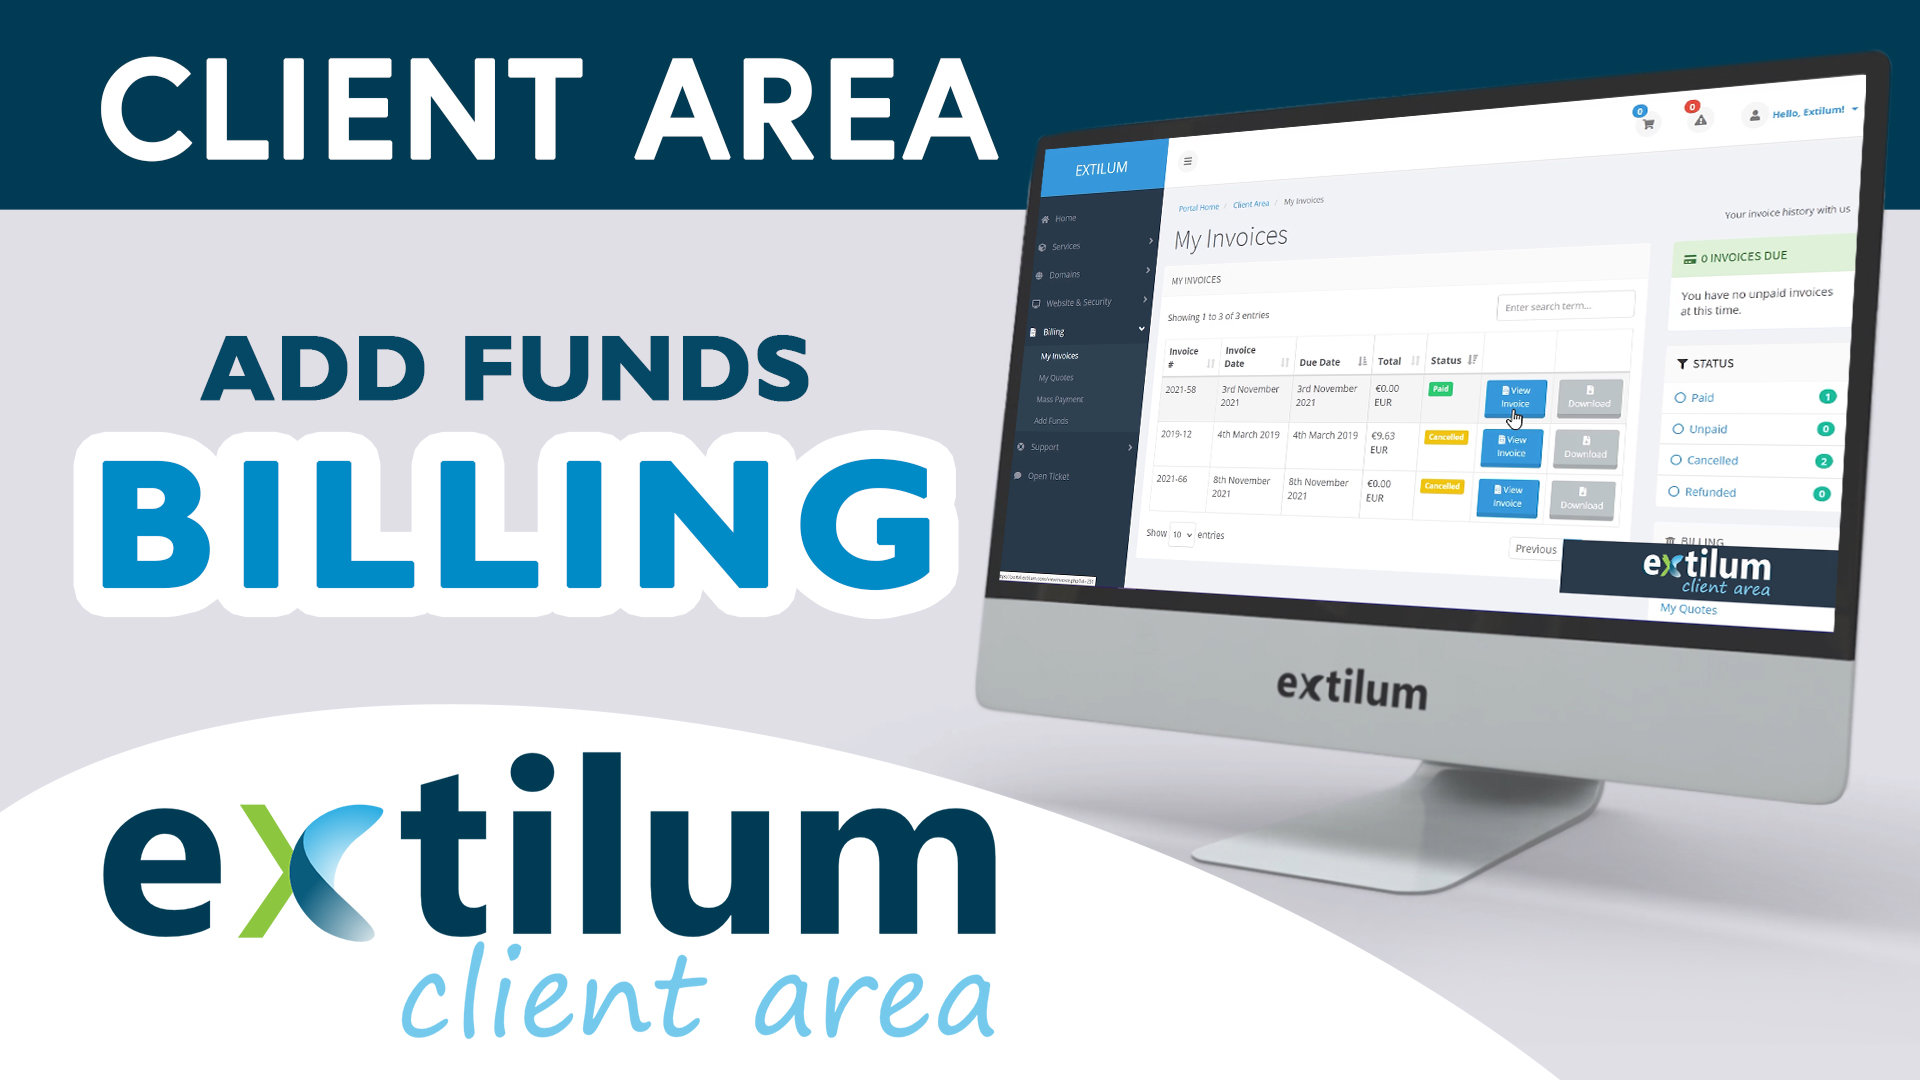 Extilum Client Area - Billing - Add Funds